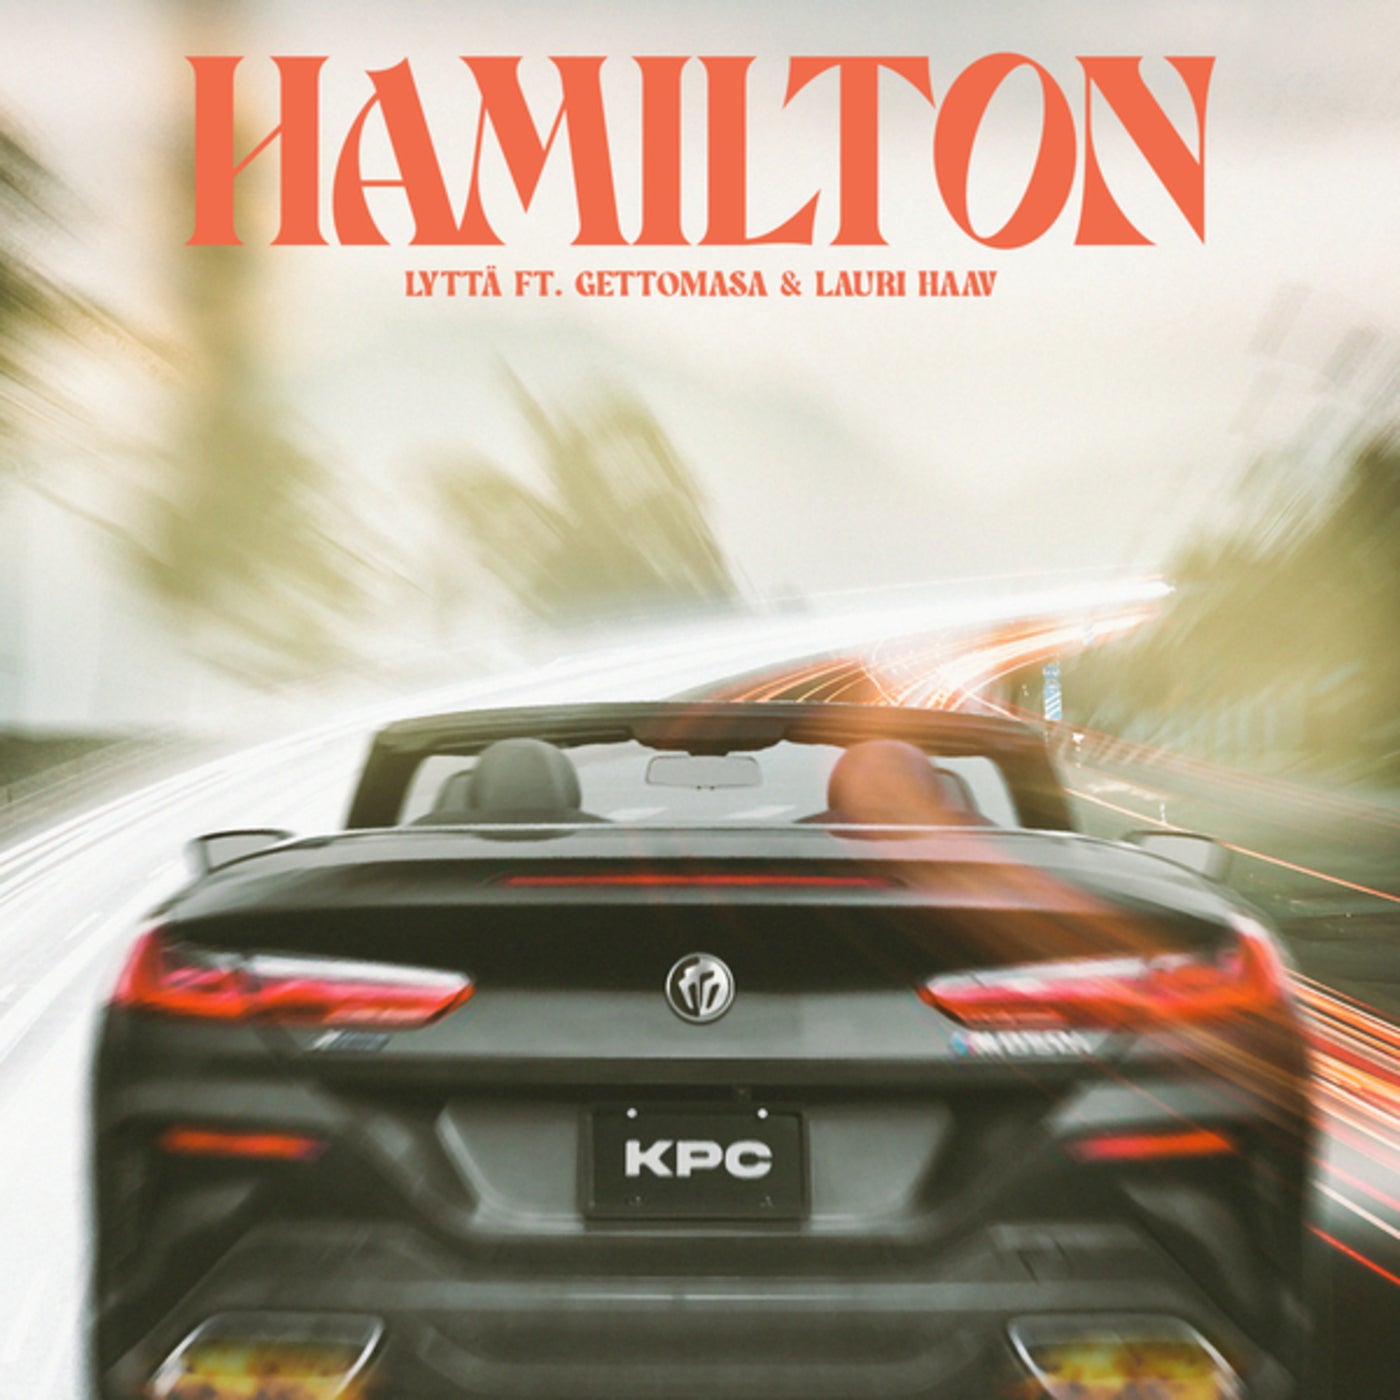 Hamilton (Feat. Gettomasa & Lauri Haav)